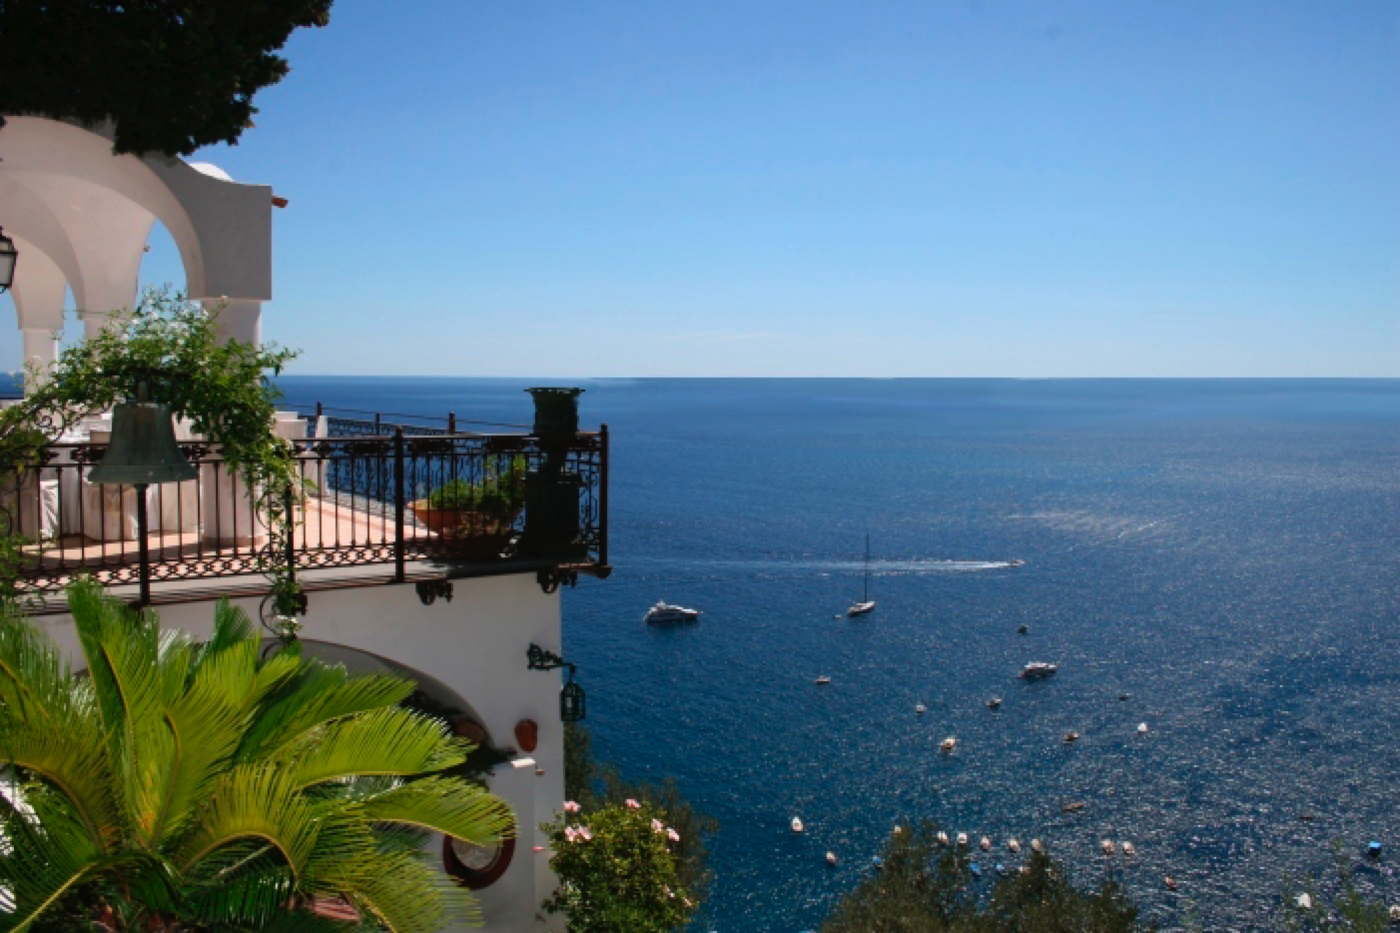 Ferienvilla hoch über dem Meer an der Amalfiküste in Italien